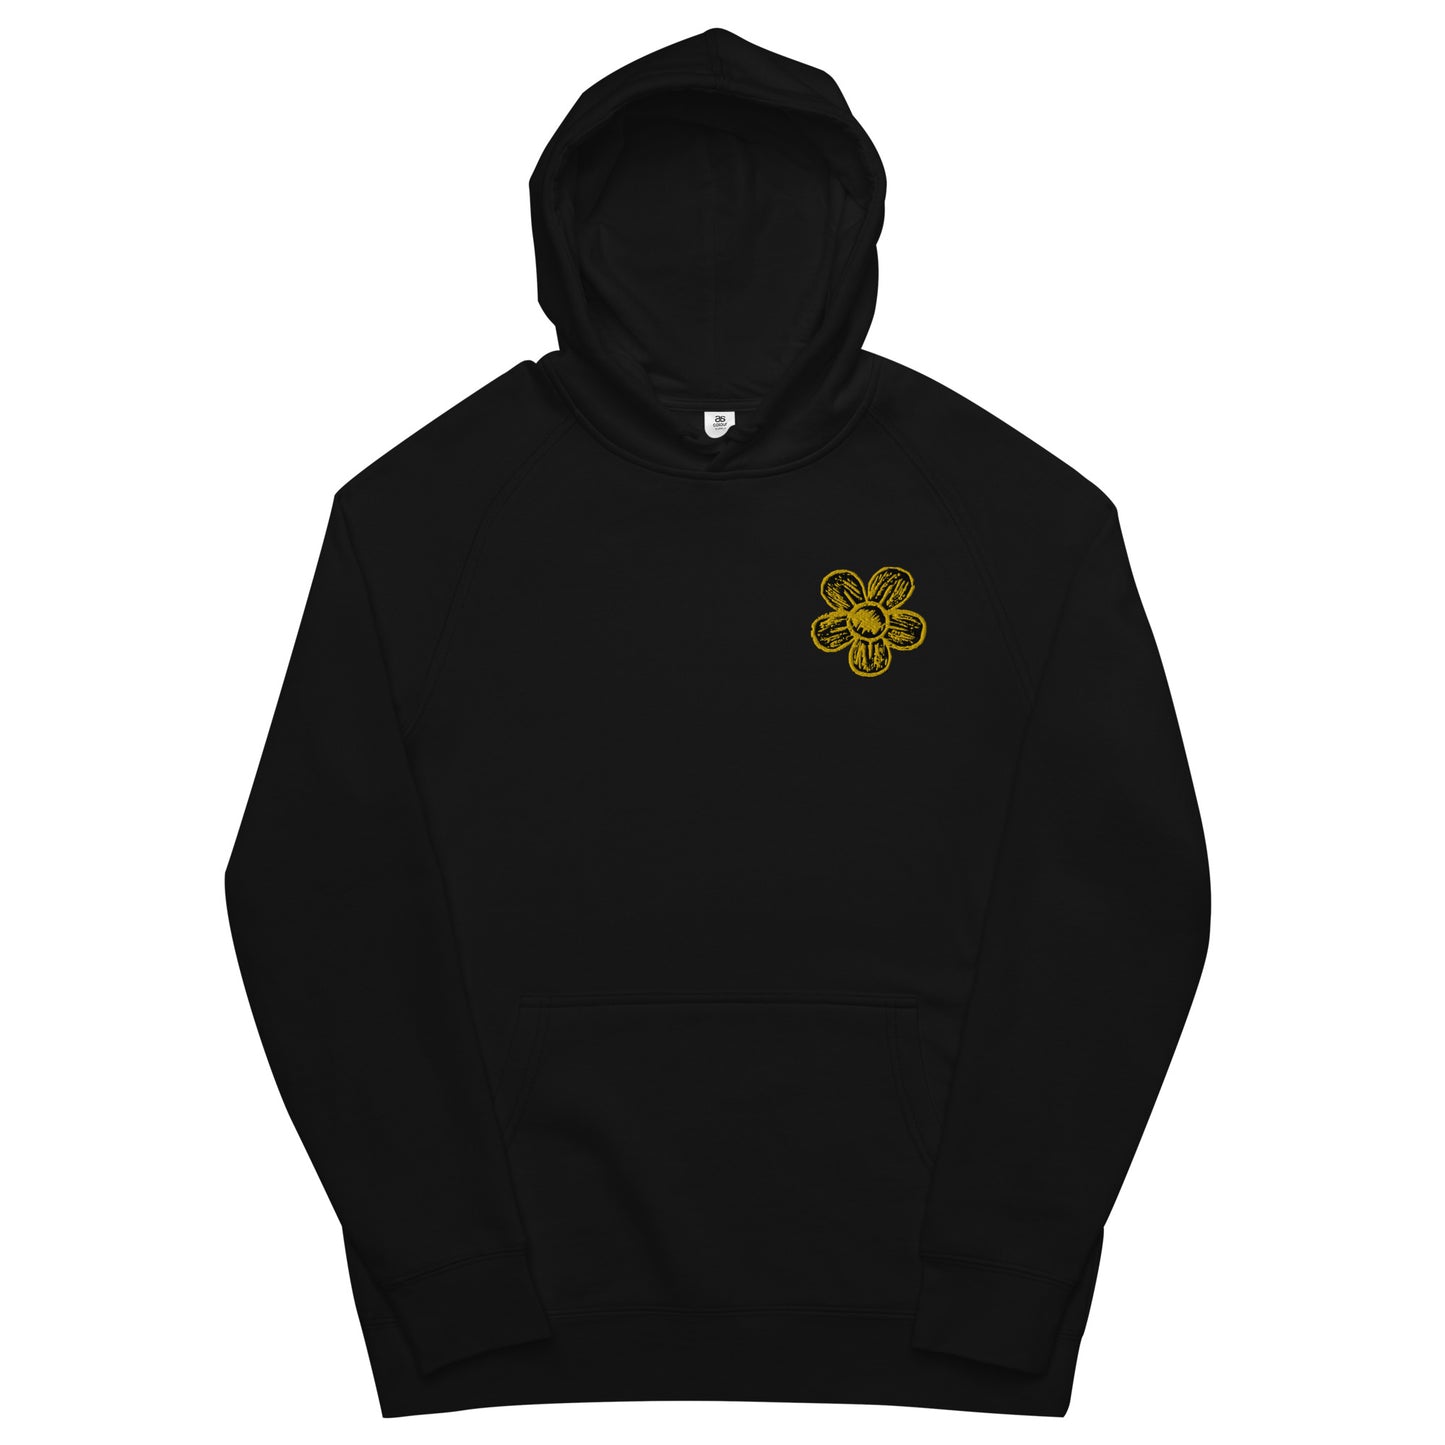 black with golden flower hoodie